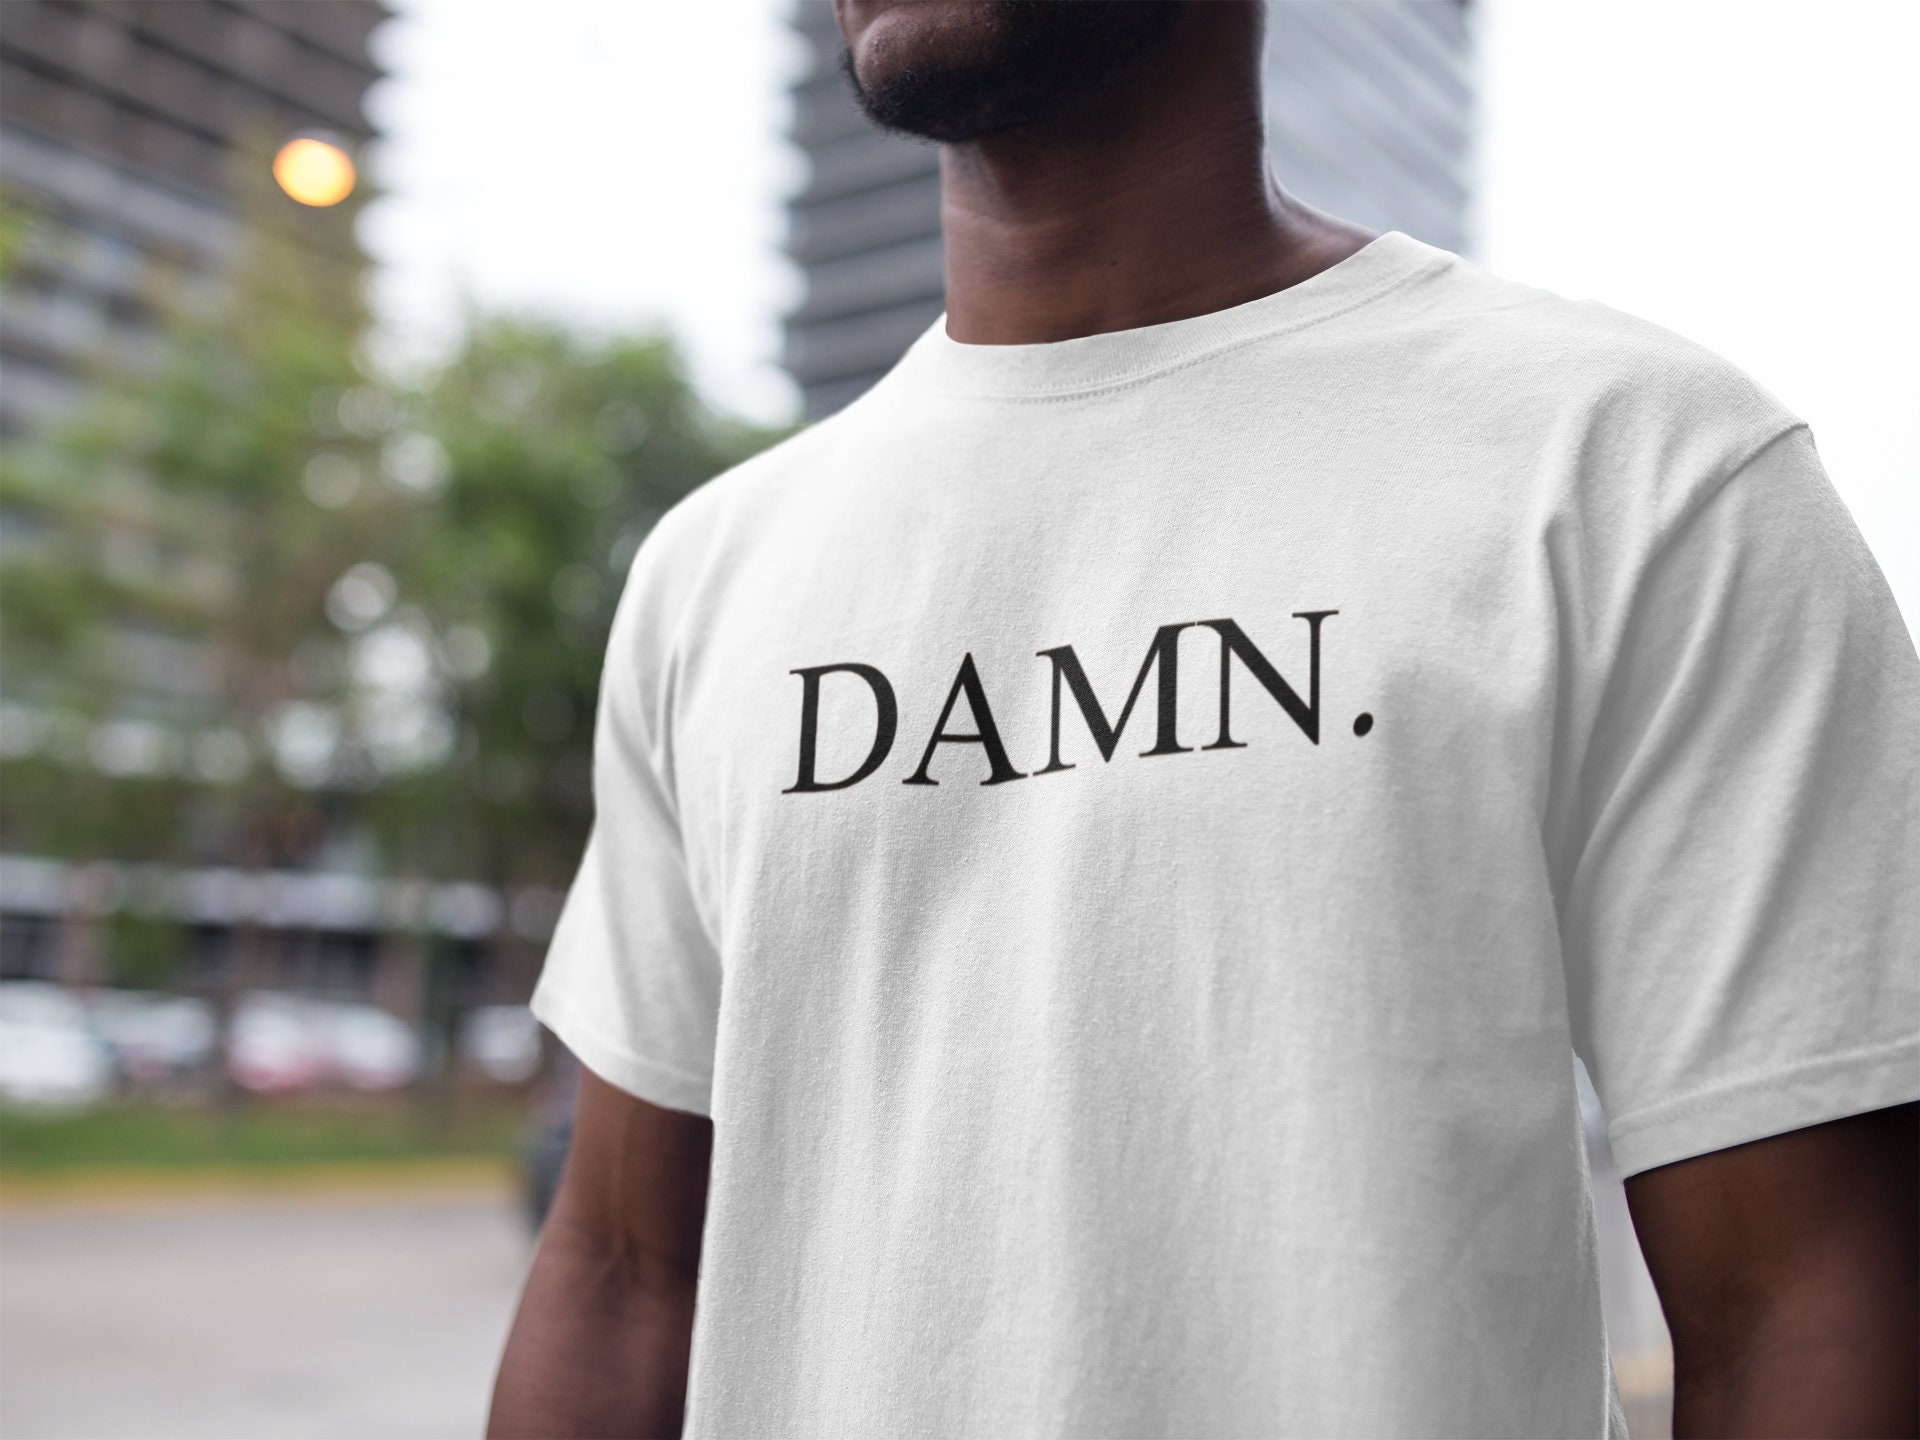 Kendrick Lamar T-shirts - Kendrick lamar (2) Essential T-Shirt